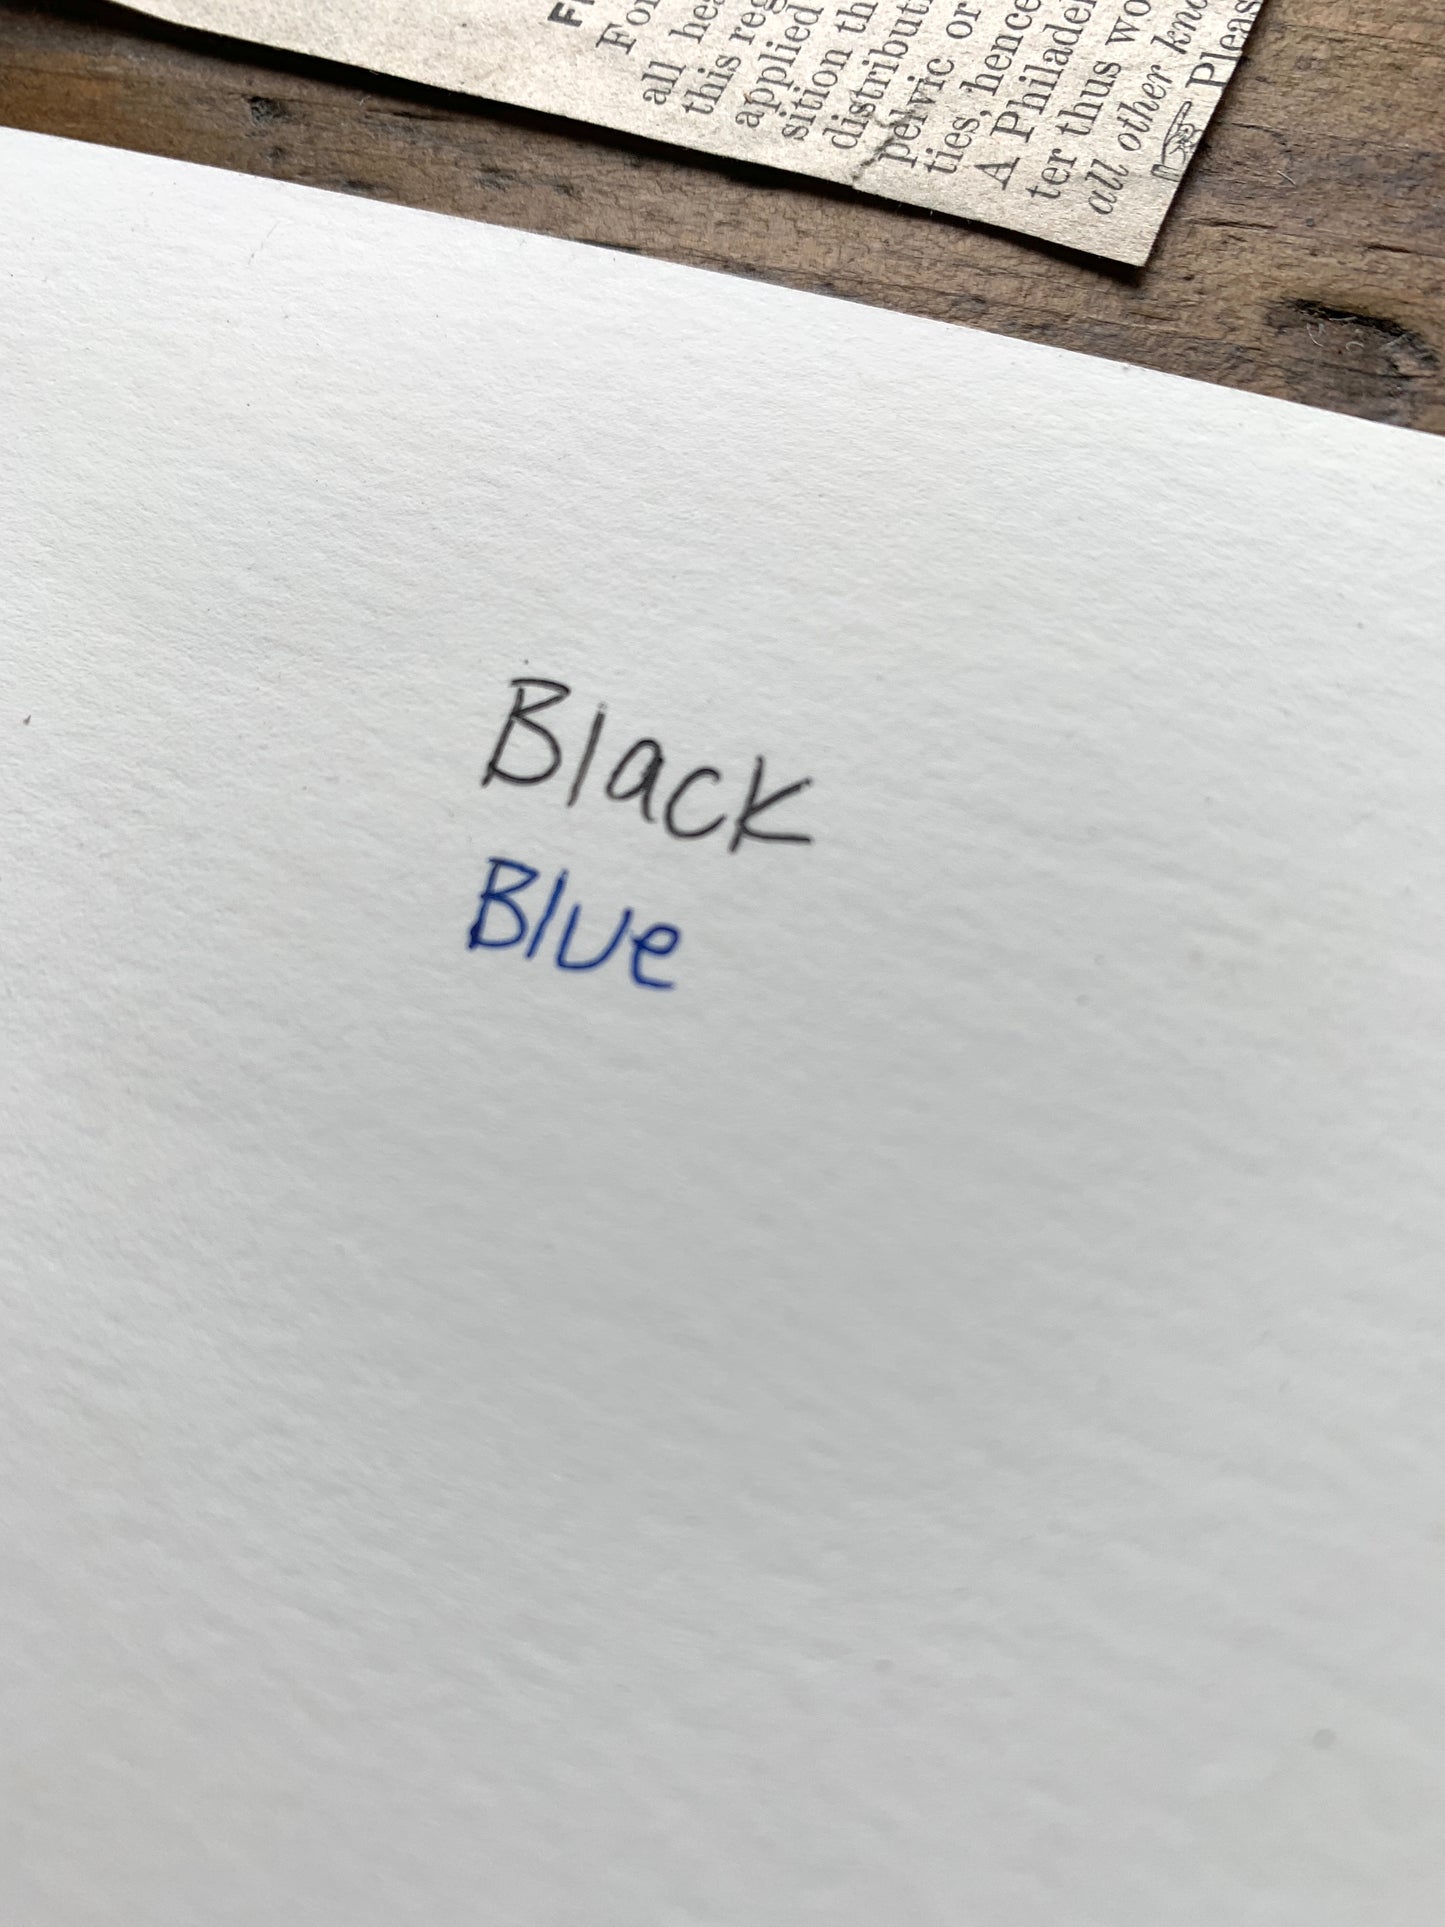 Gel pen refills (black or blue)